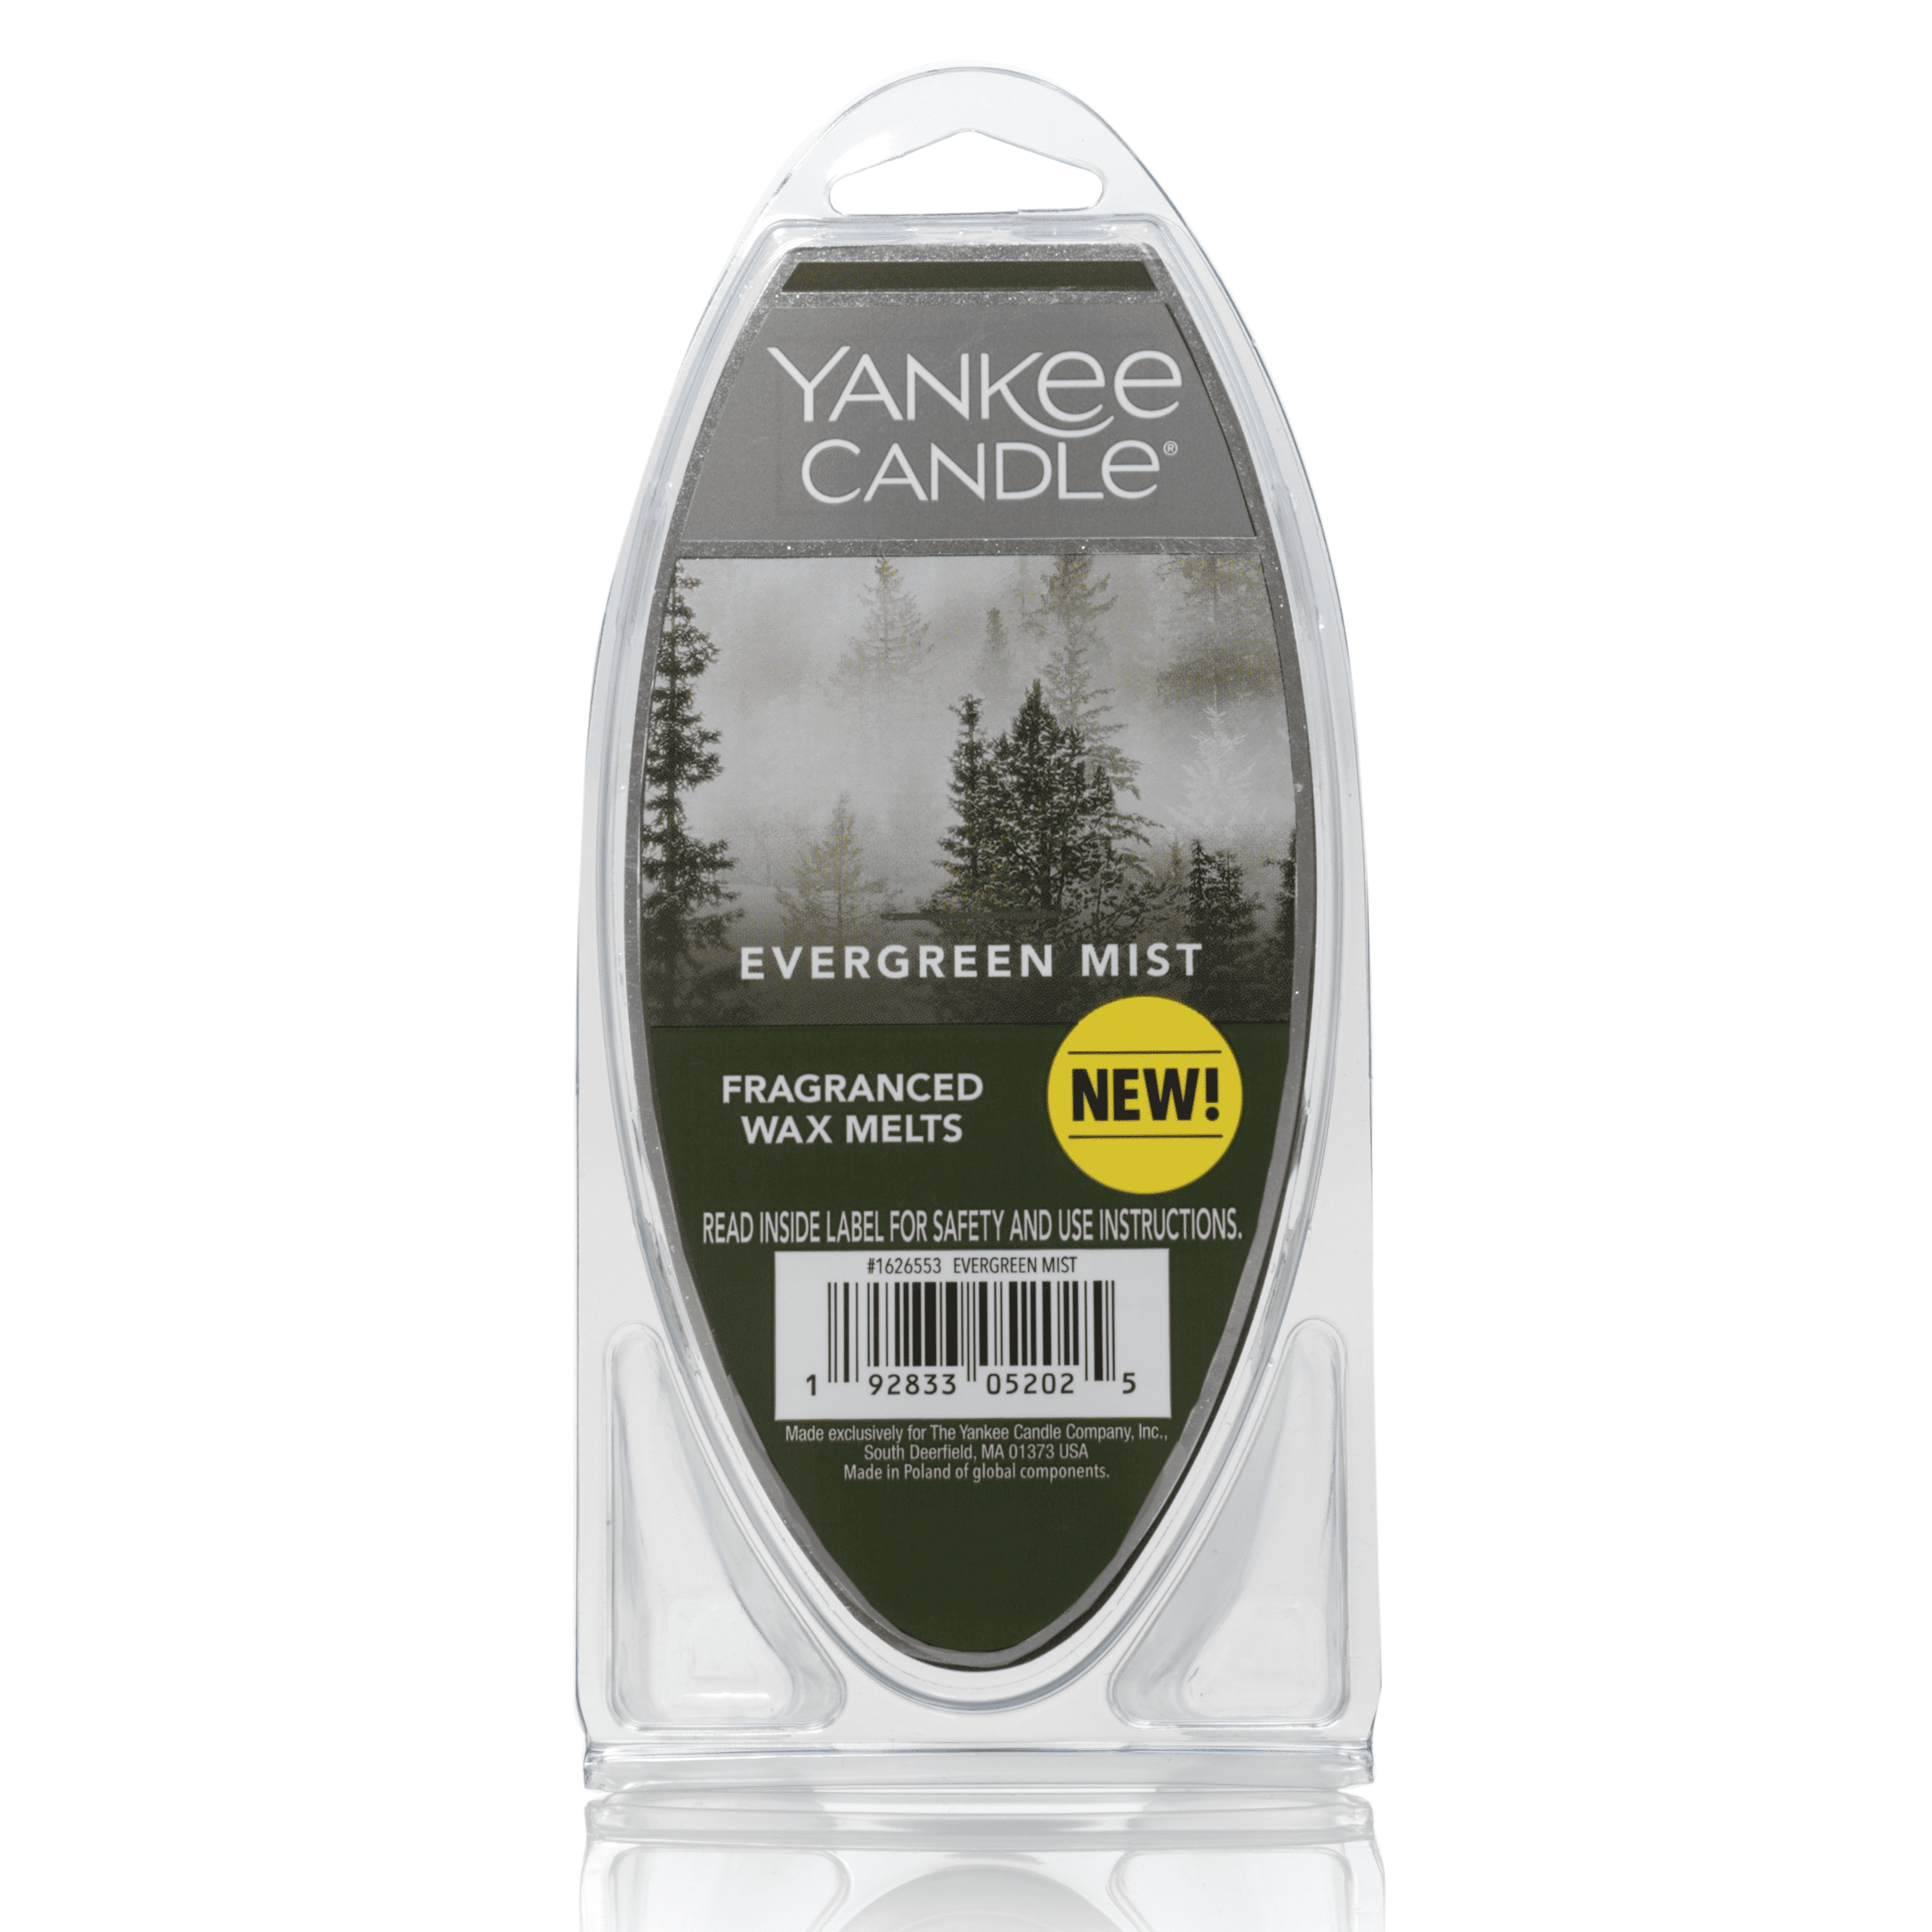 Yankee Candle Evergreen Mist Large Jar 22oz NEW! Mountain Holiday